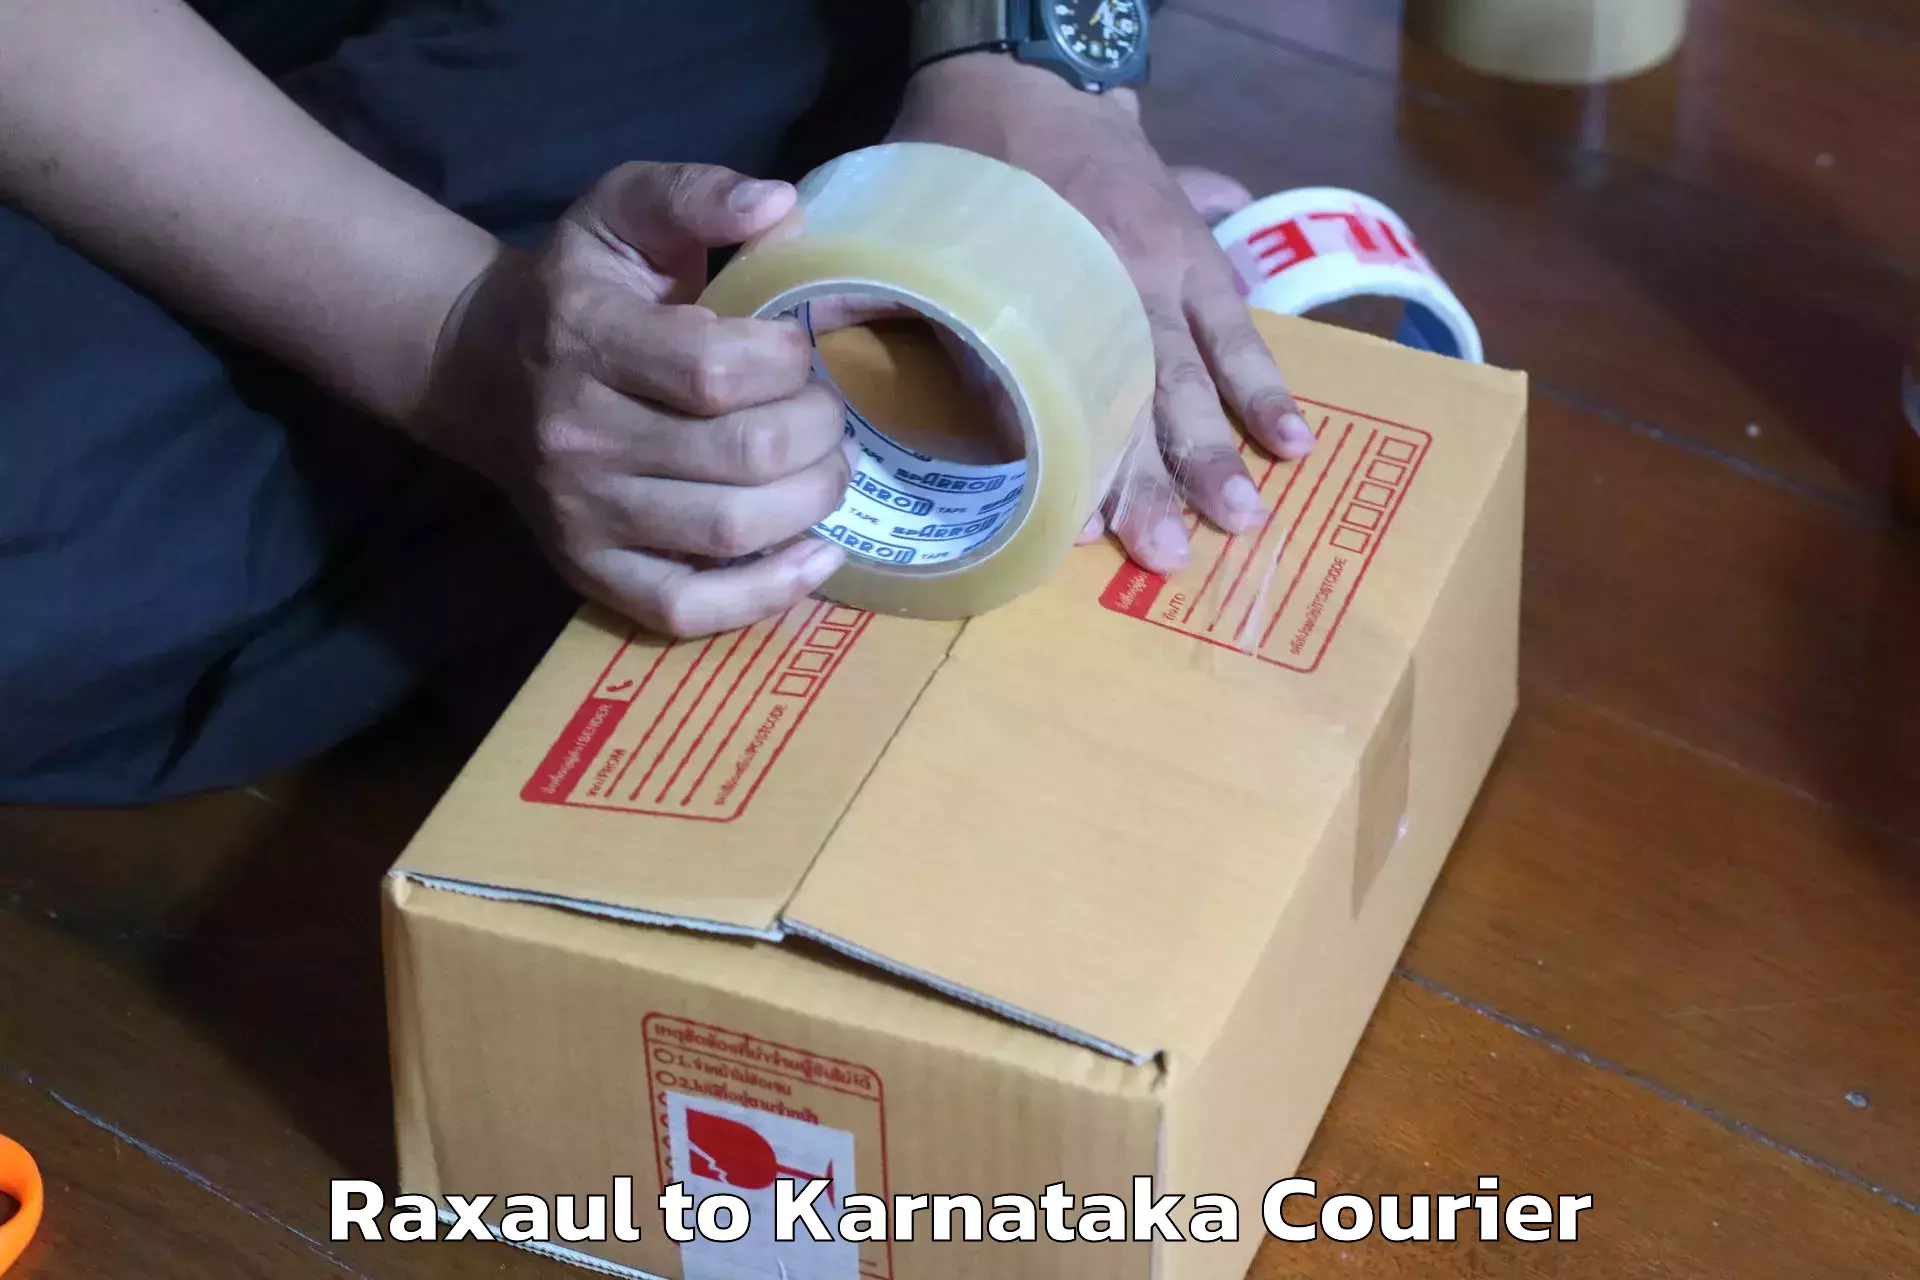 Furniture delivery service Raxaul to Karnataka